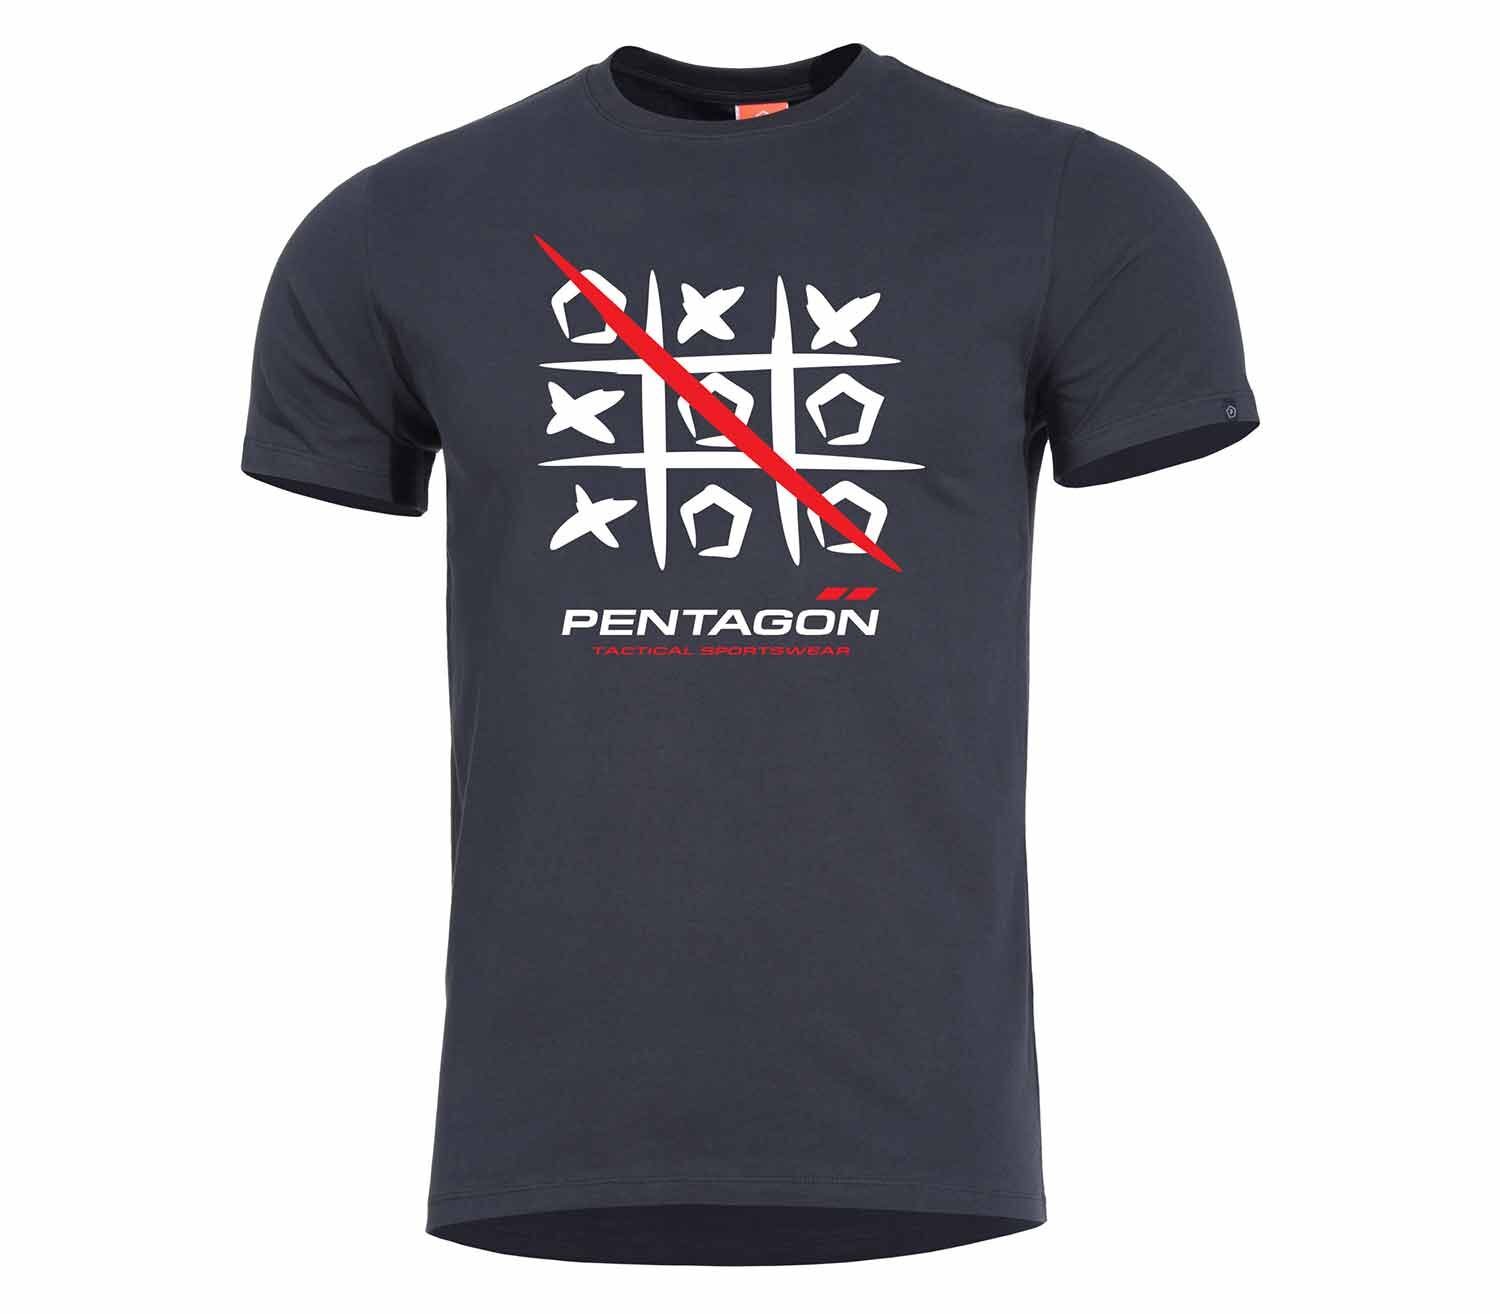 Camiseta-Pentagon-3T-front.jpg